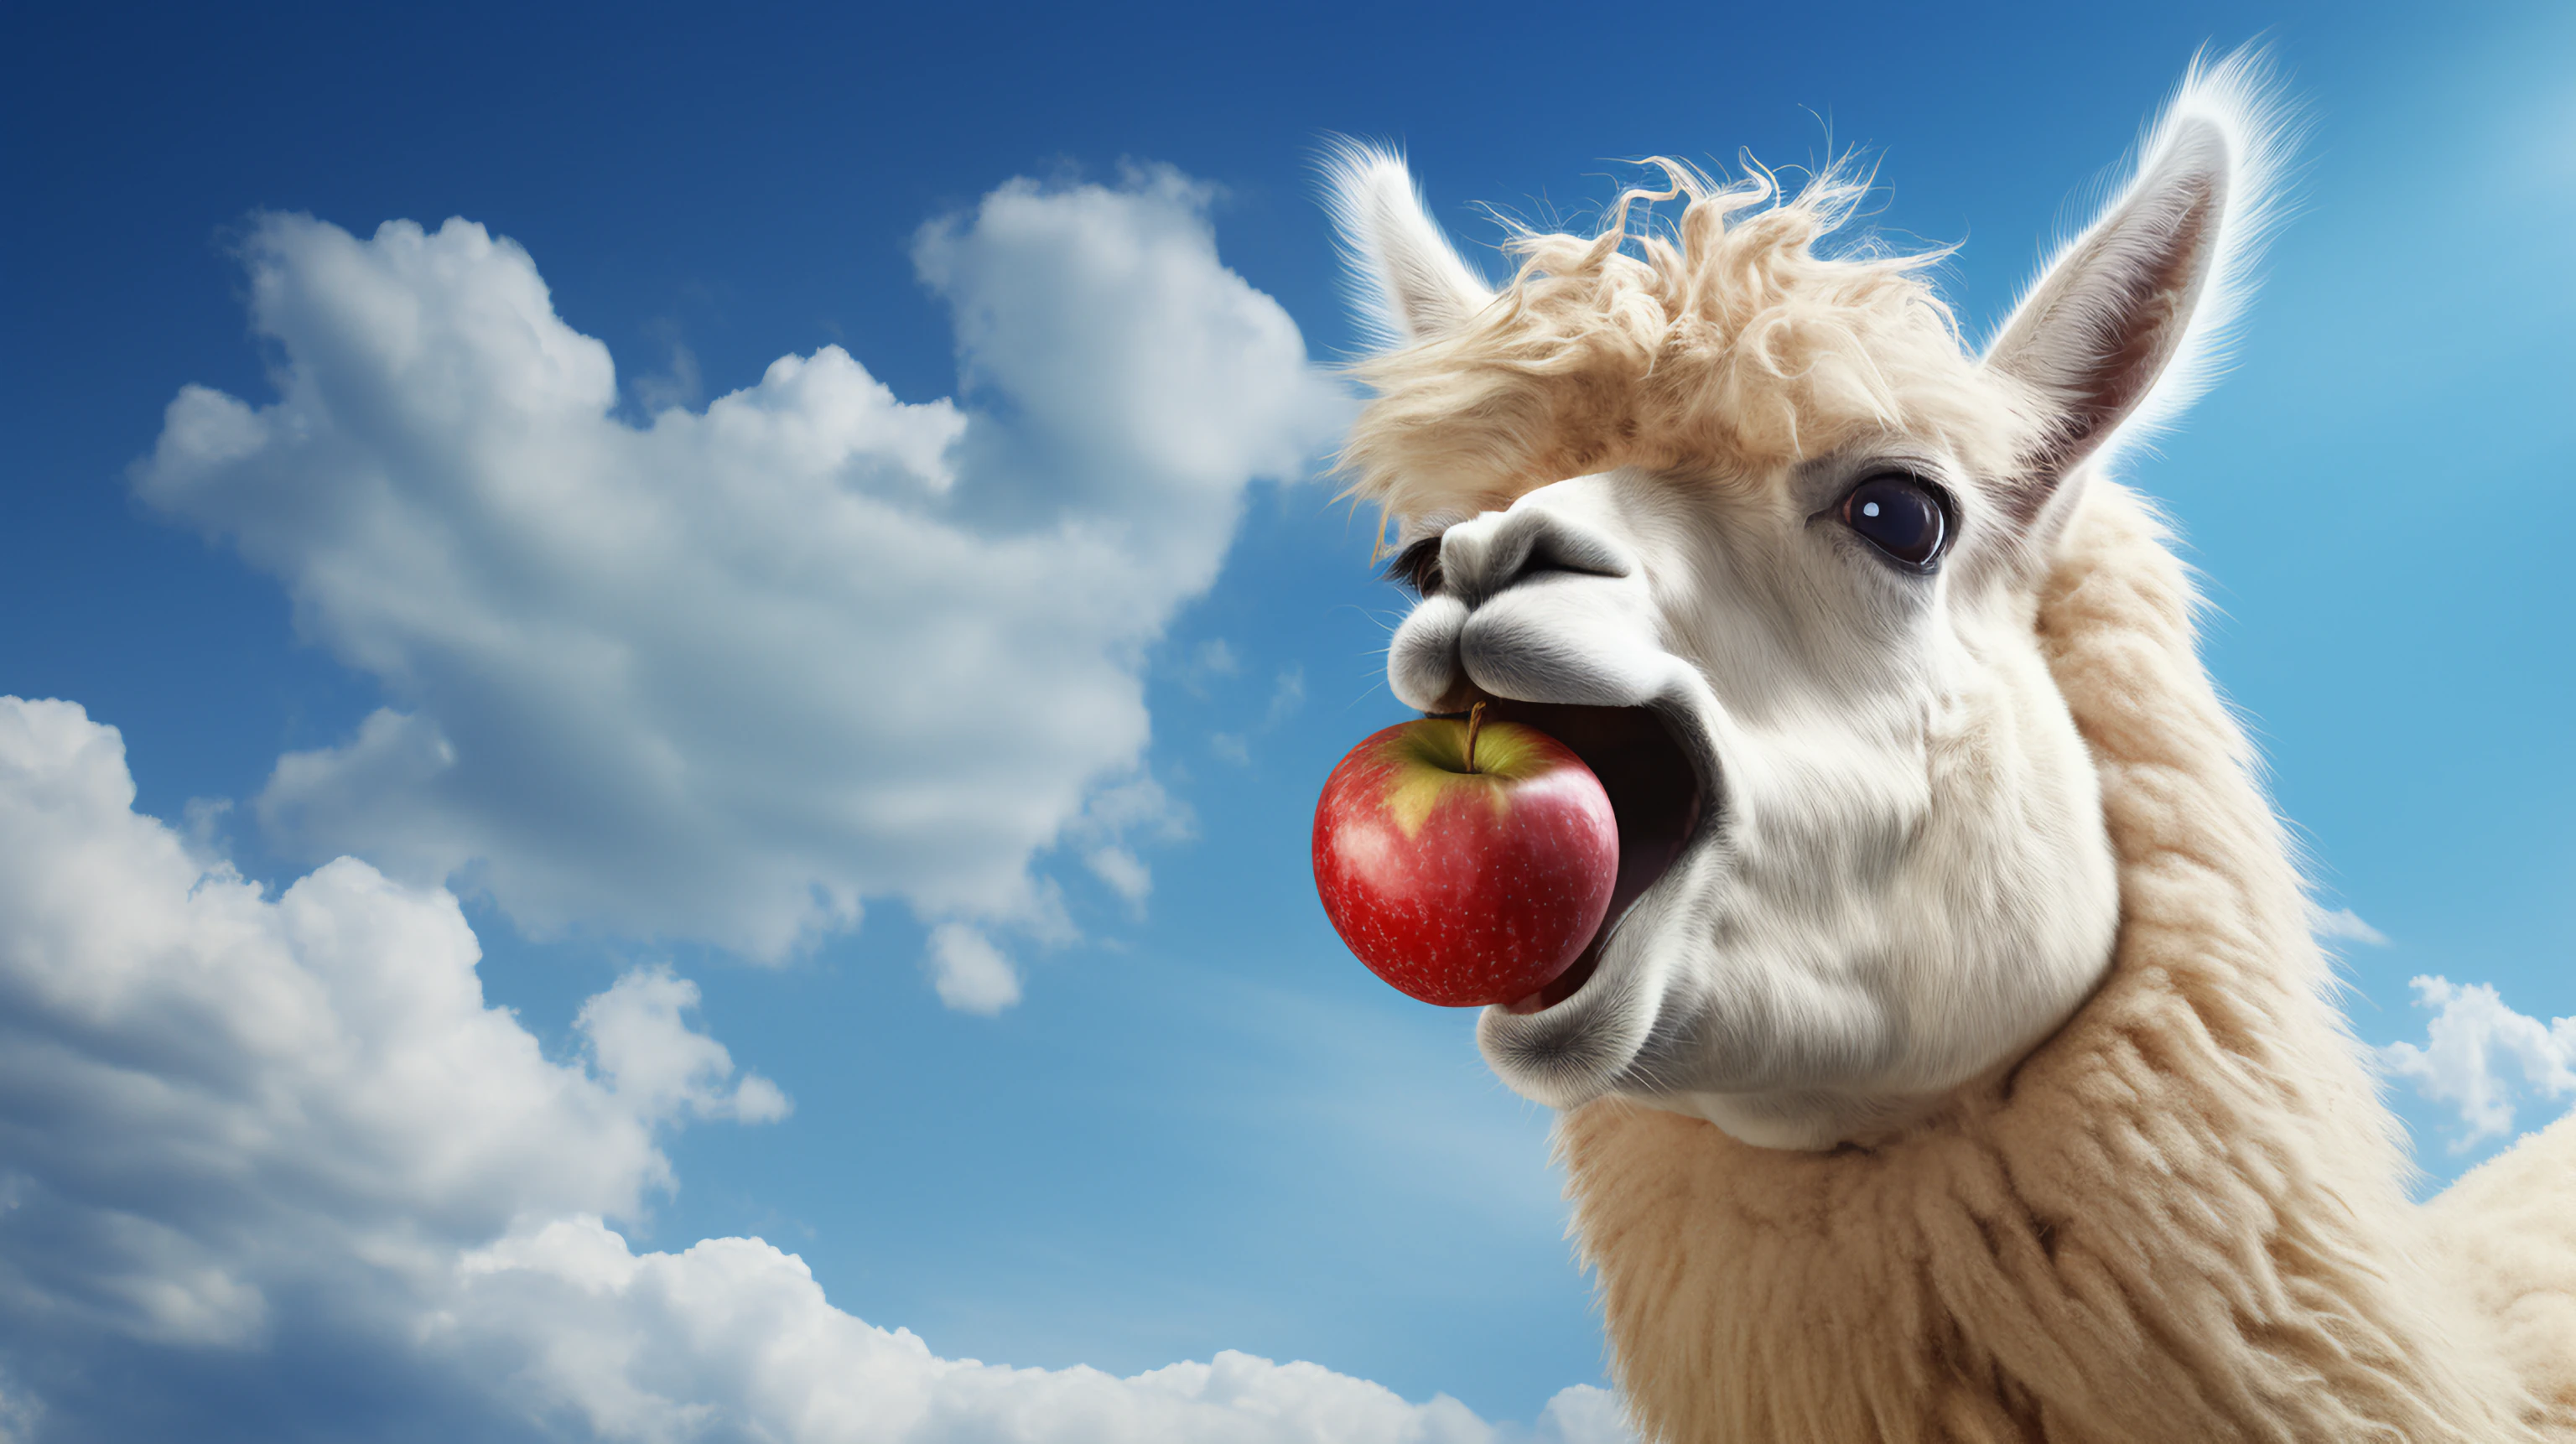 Llama eating apple